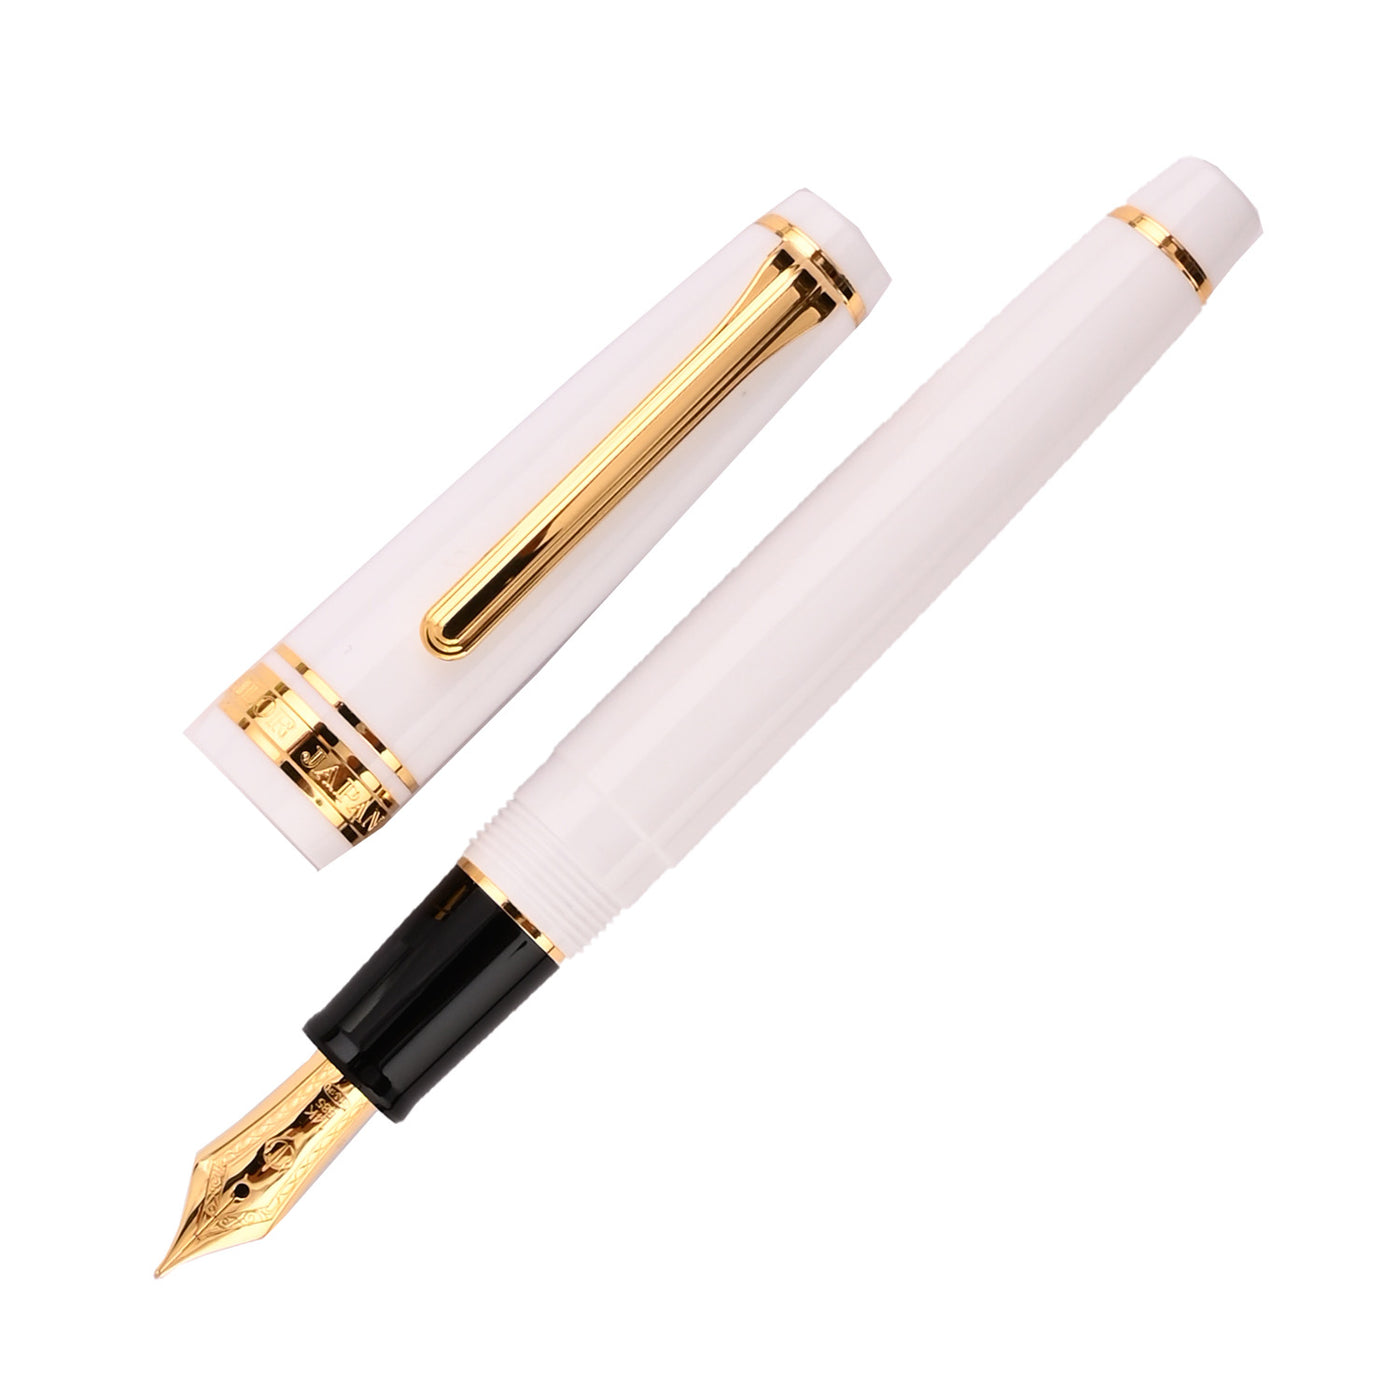 Sailor Professional Gear Slim Fountain Pen - White GT 1